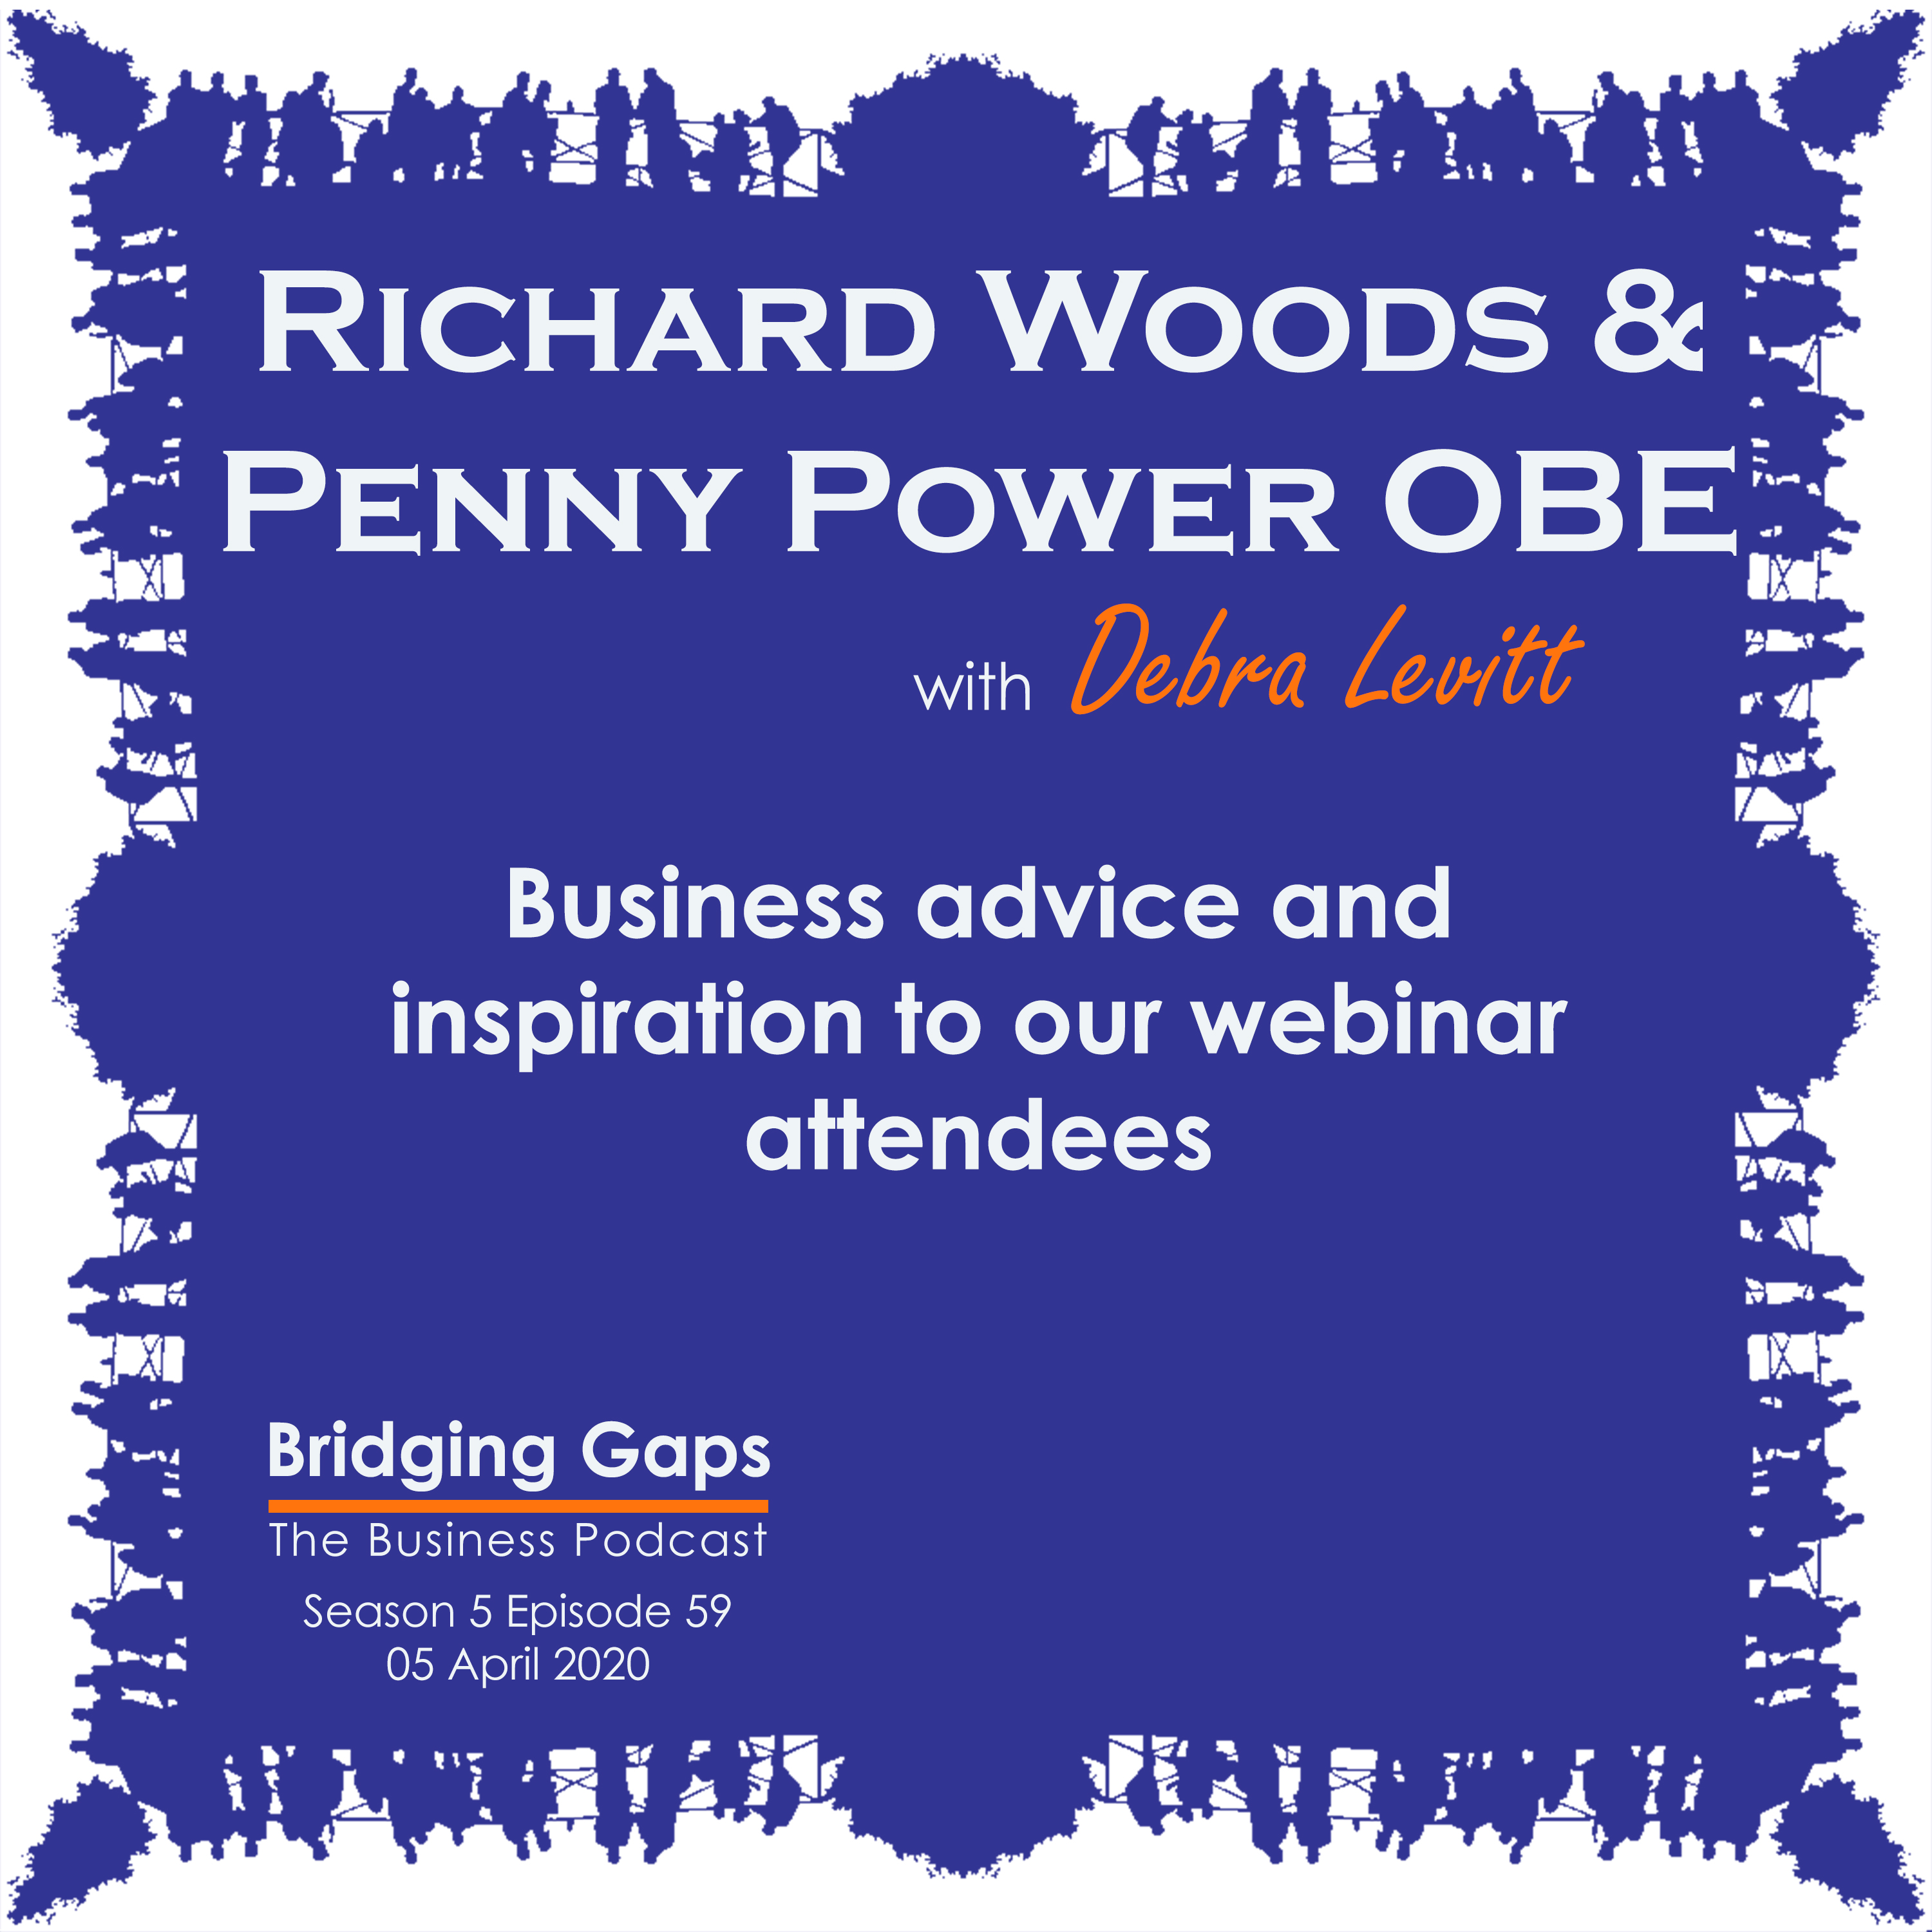 Penny Power OBE & Richard Woods: Business Advice